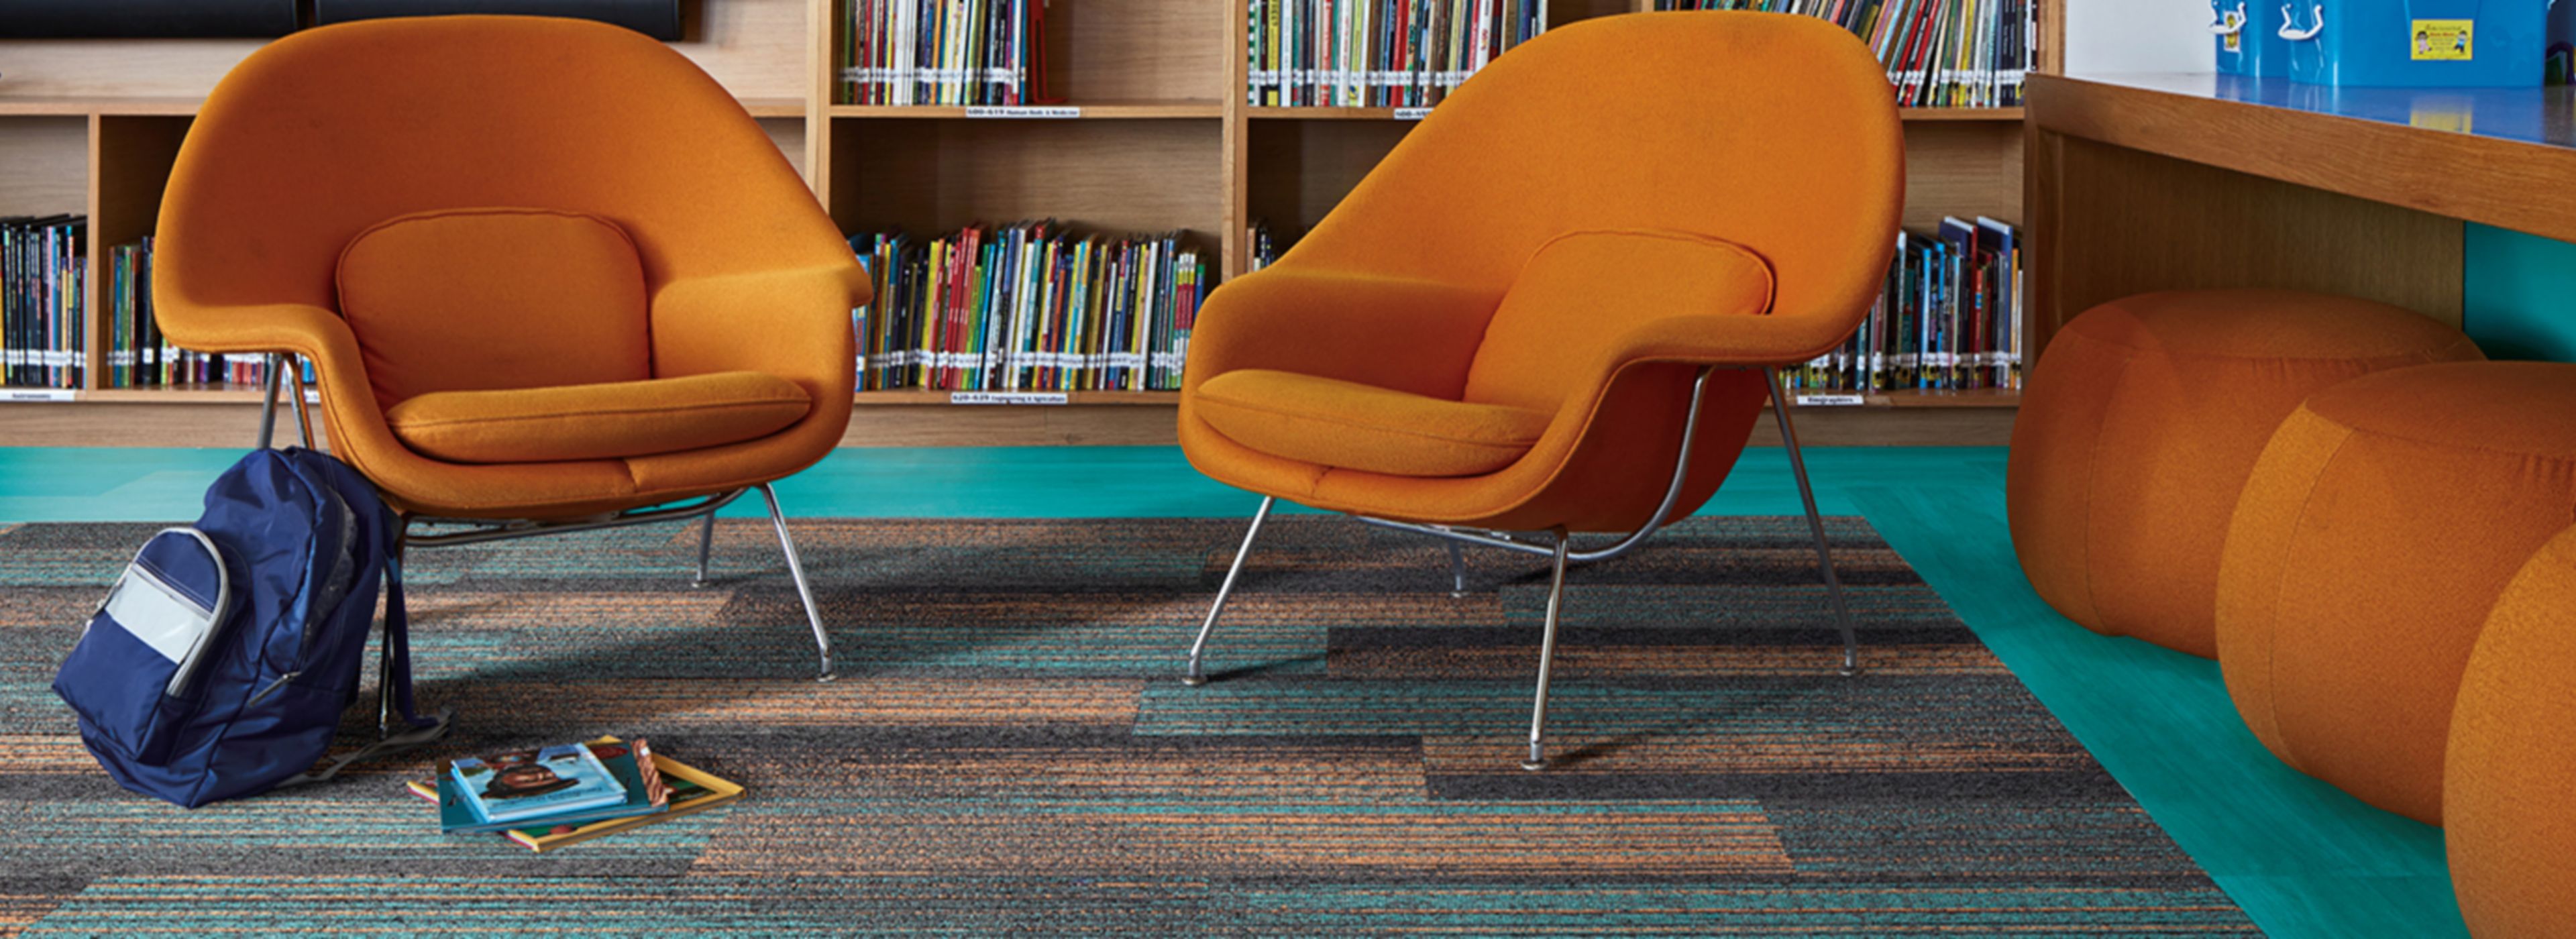 Interface Ground Waves Verse plank carpet tile and Studio Set LVT in library corner imagen número 1